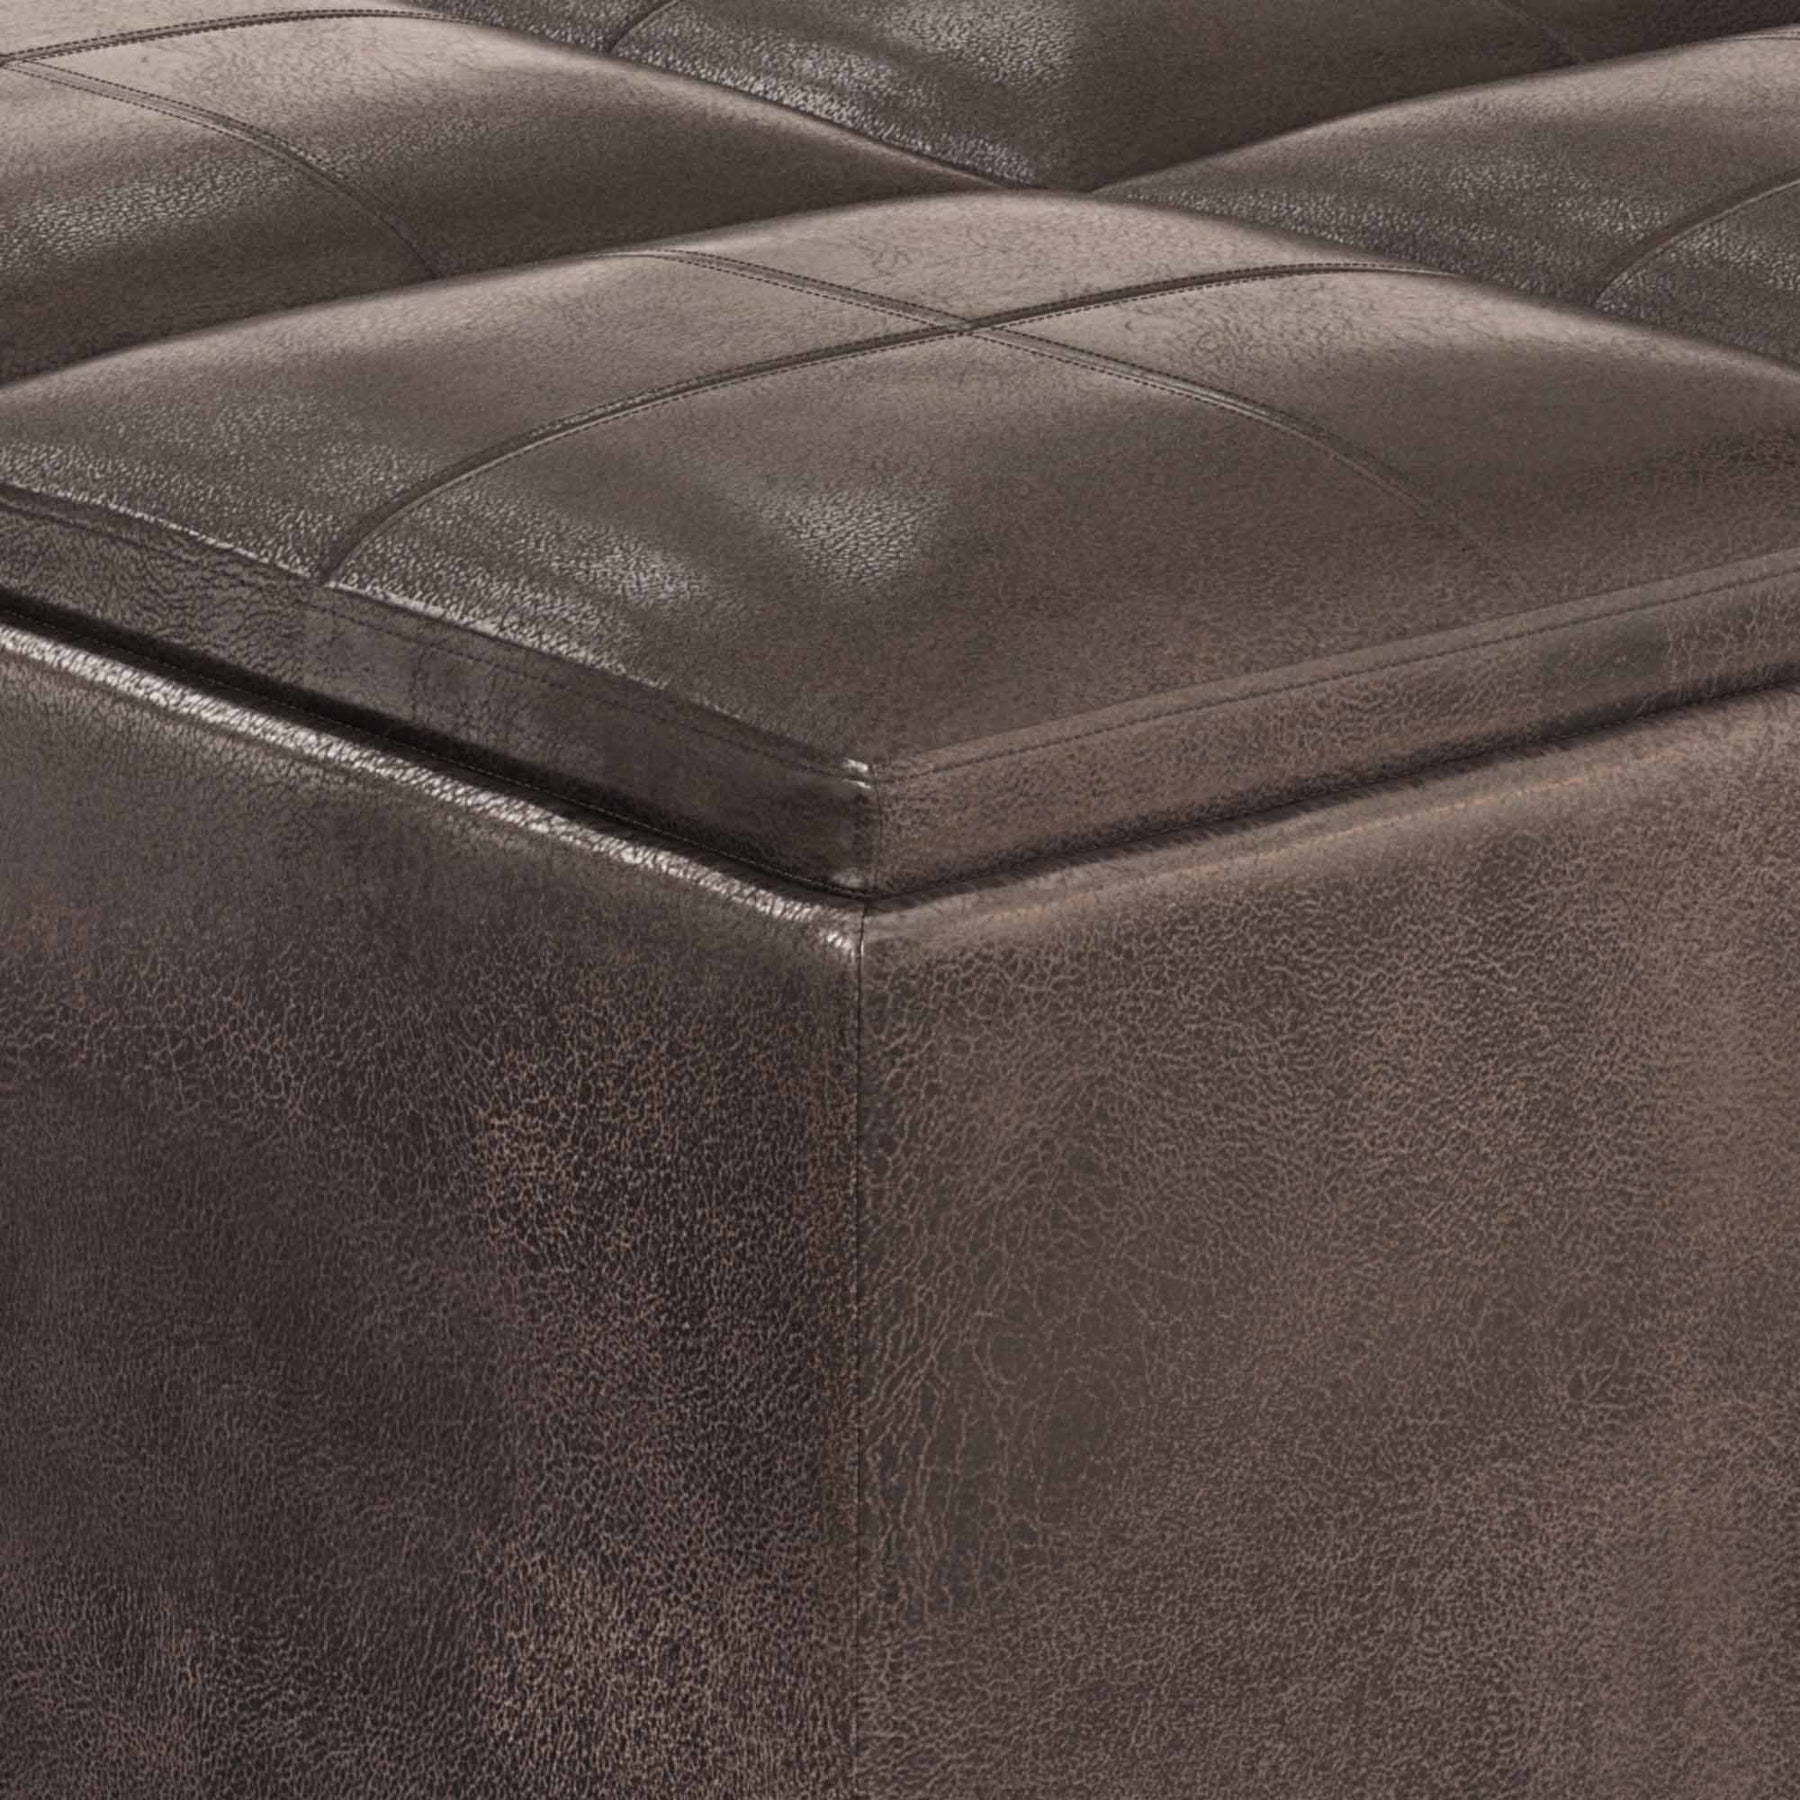 Distressed Brown Distressed Vegan Leather | Avalon Vegan Leather Square Coffee Table Storage Ottoman